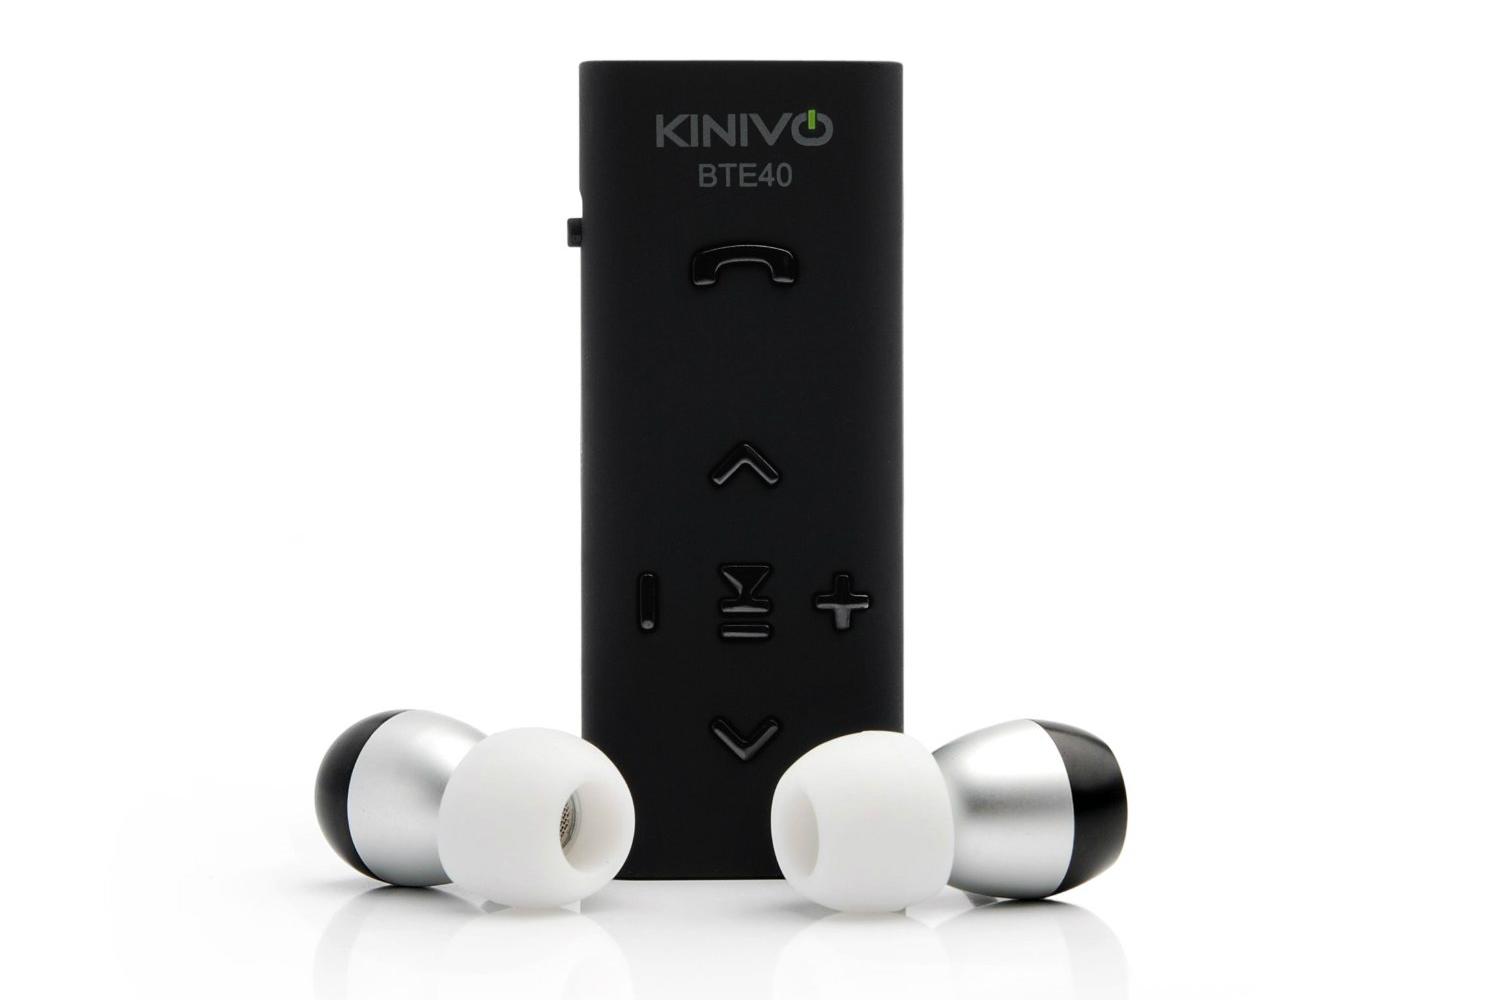 kinivos bte40 makes any headphones or home stereo wireless 2